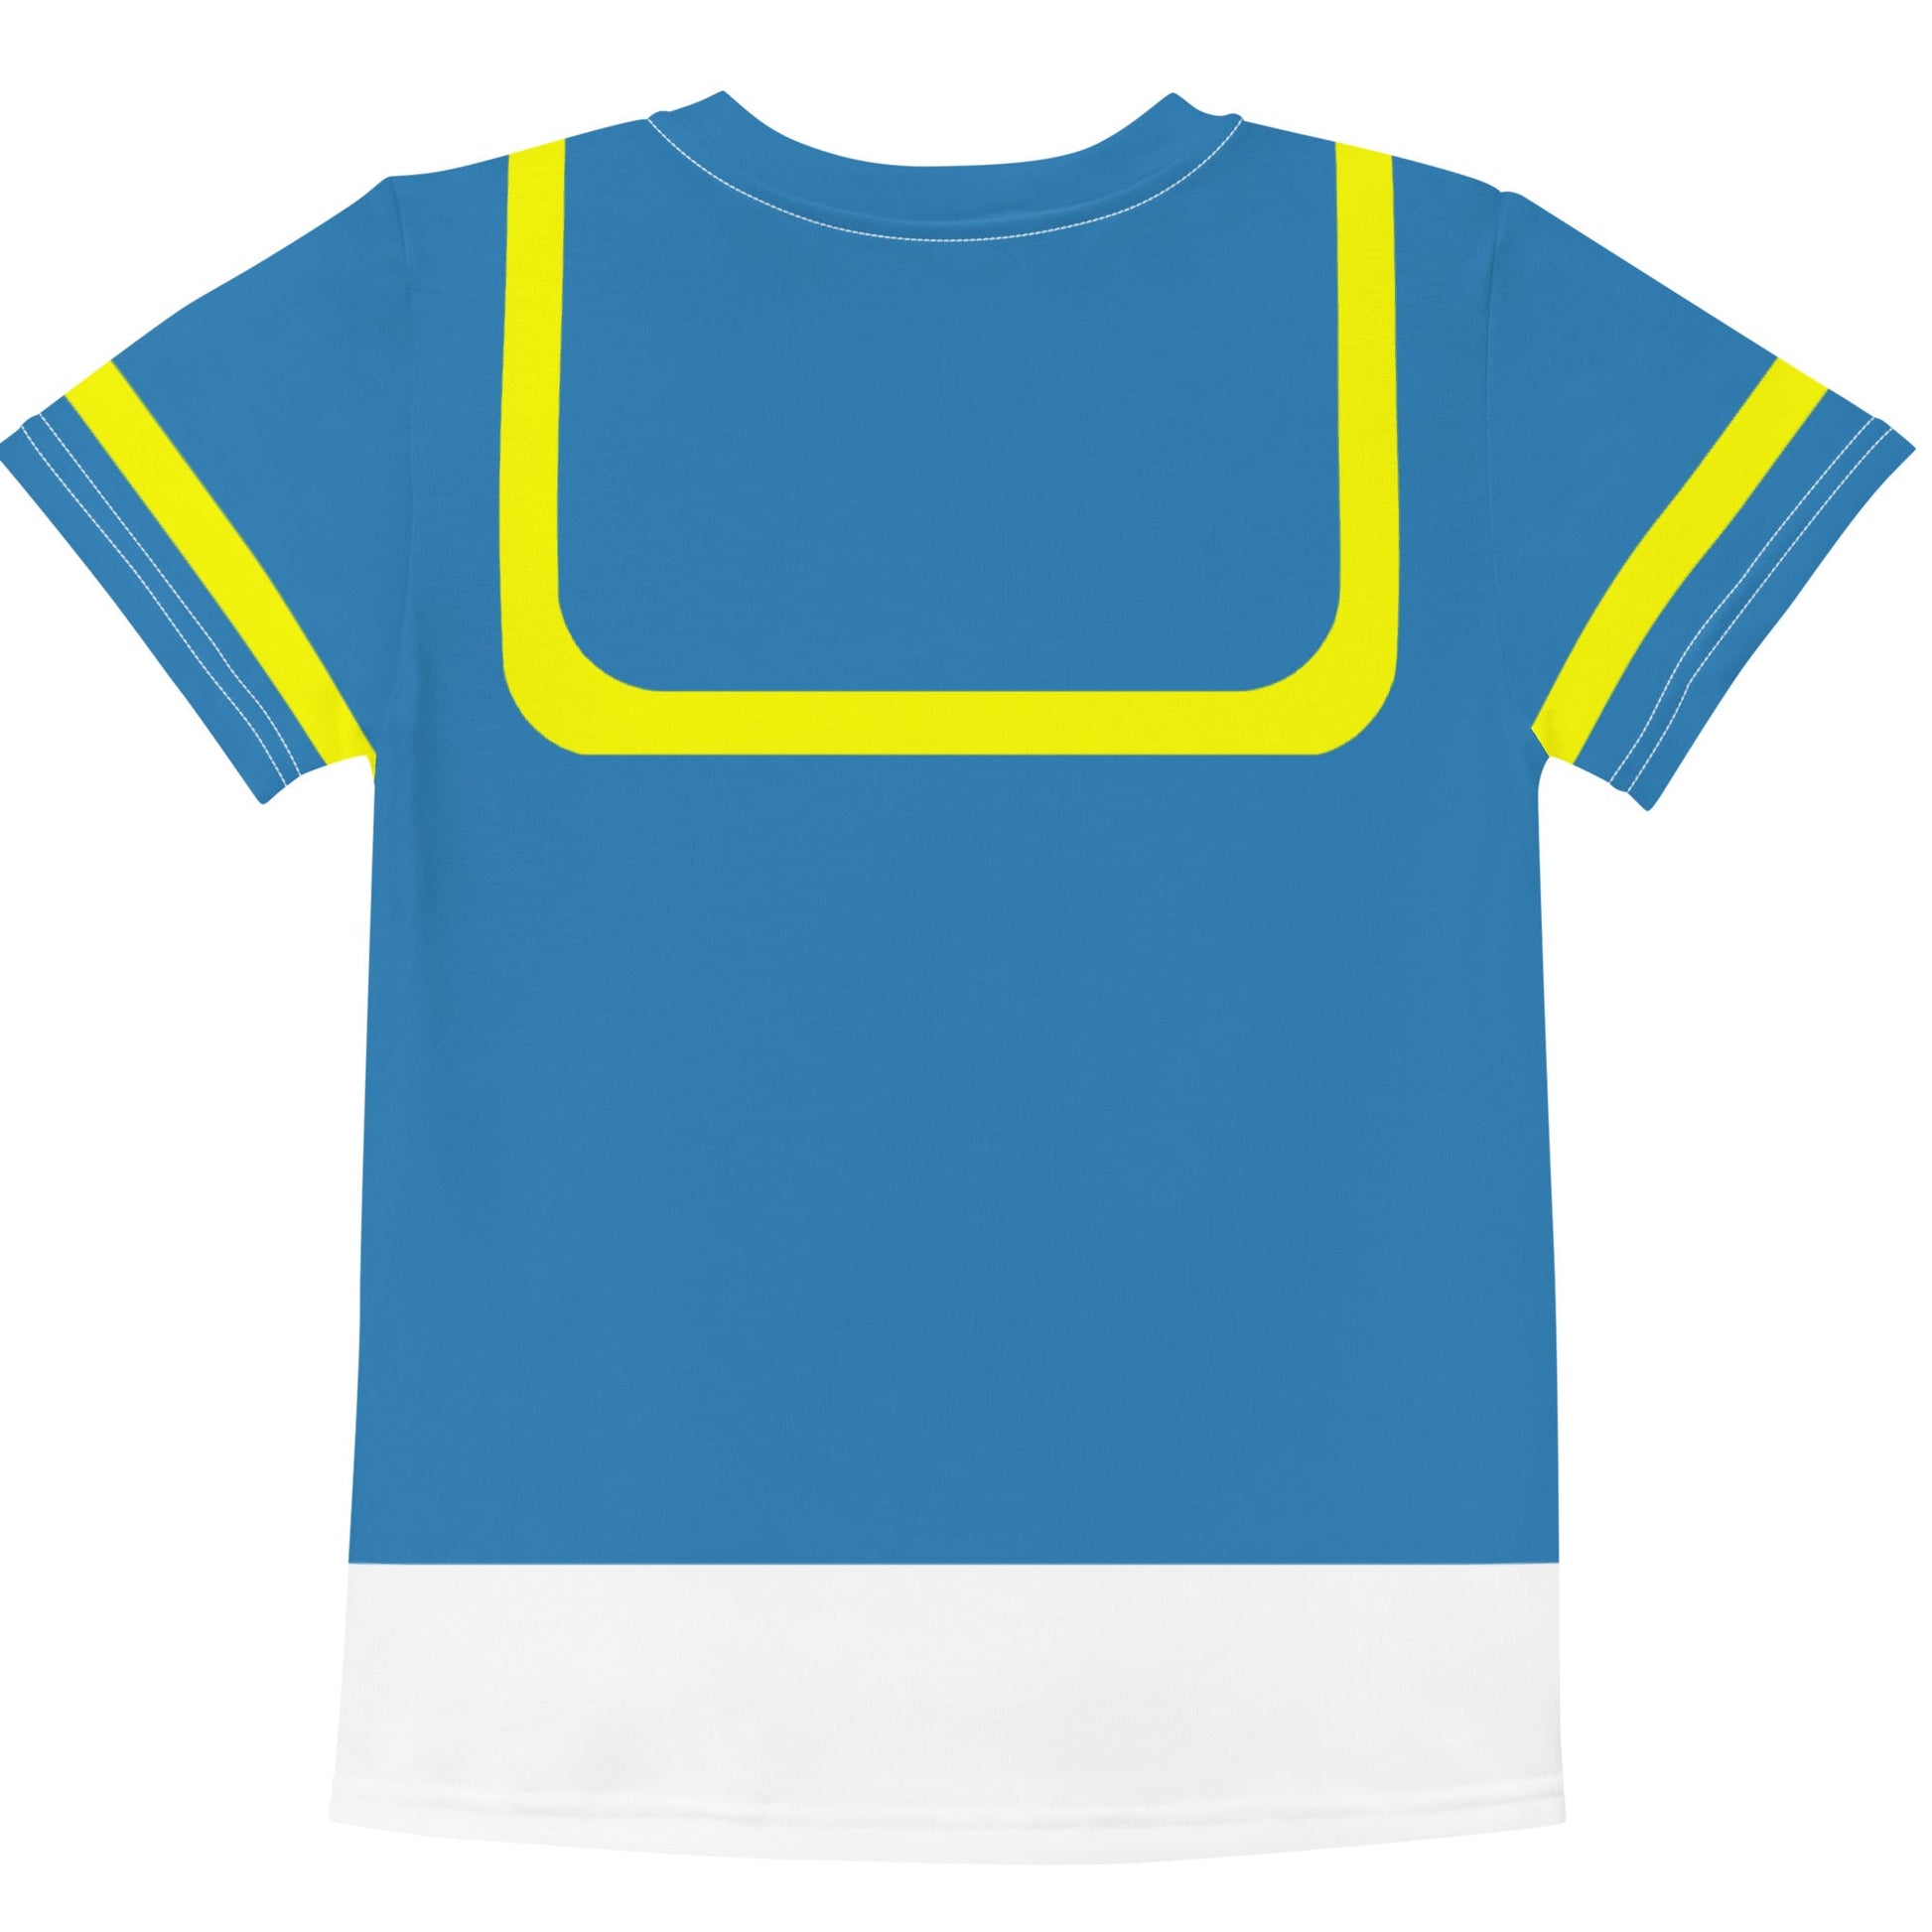 Grumpy Duck Kids crew neck t-shirt active disney familydisney babydisney cosplay#tag4##tag5##tag6#